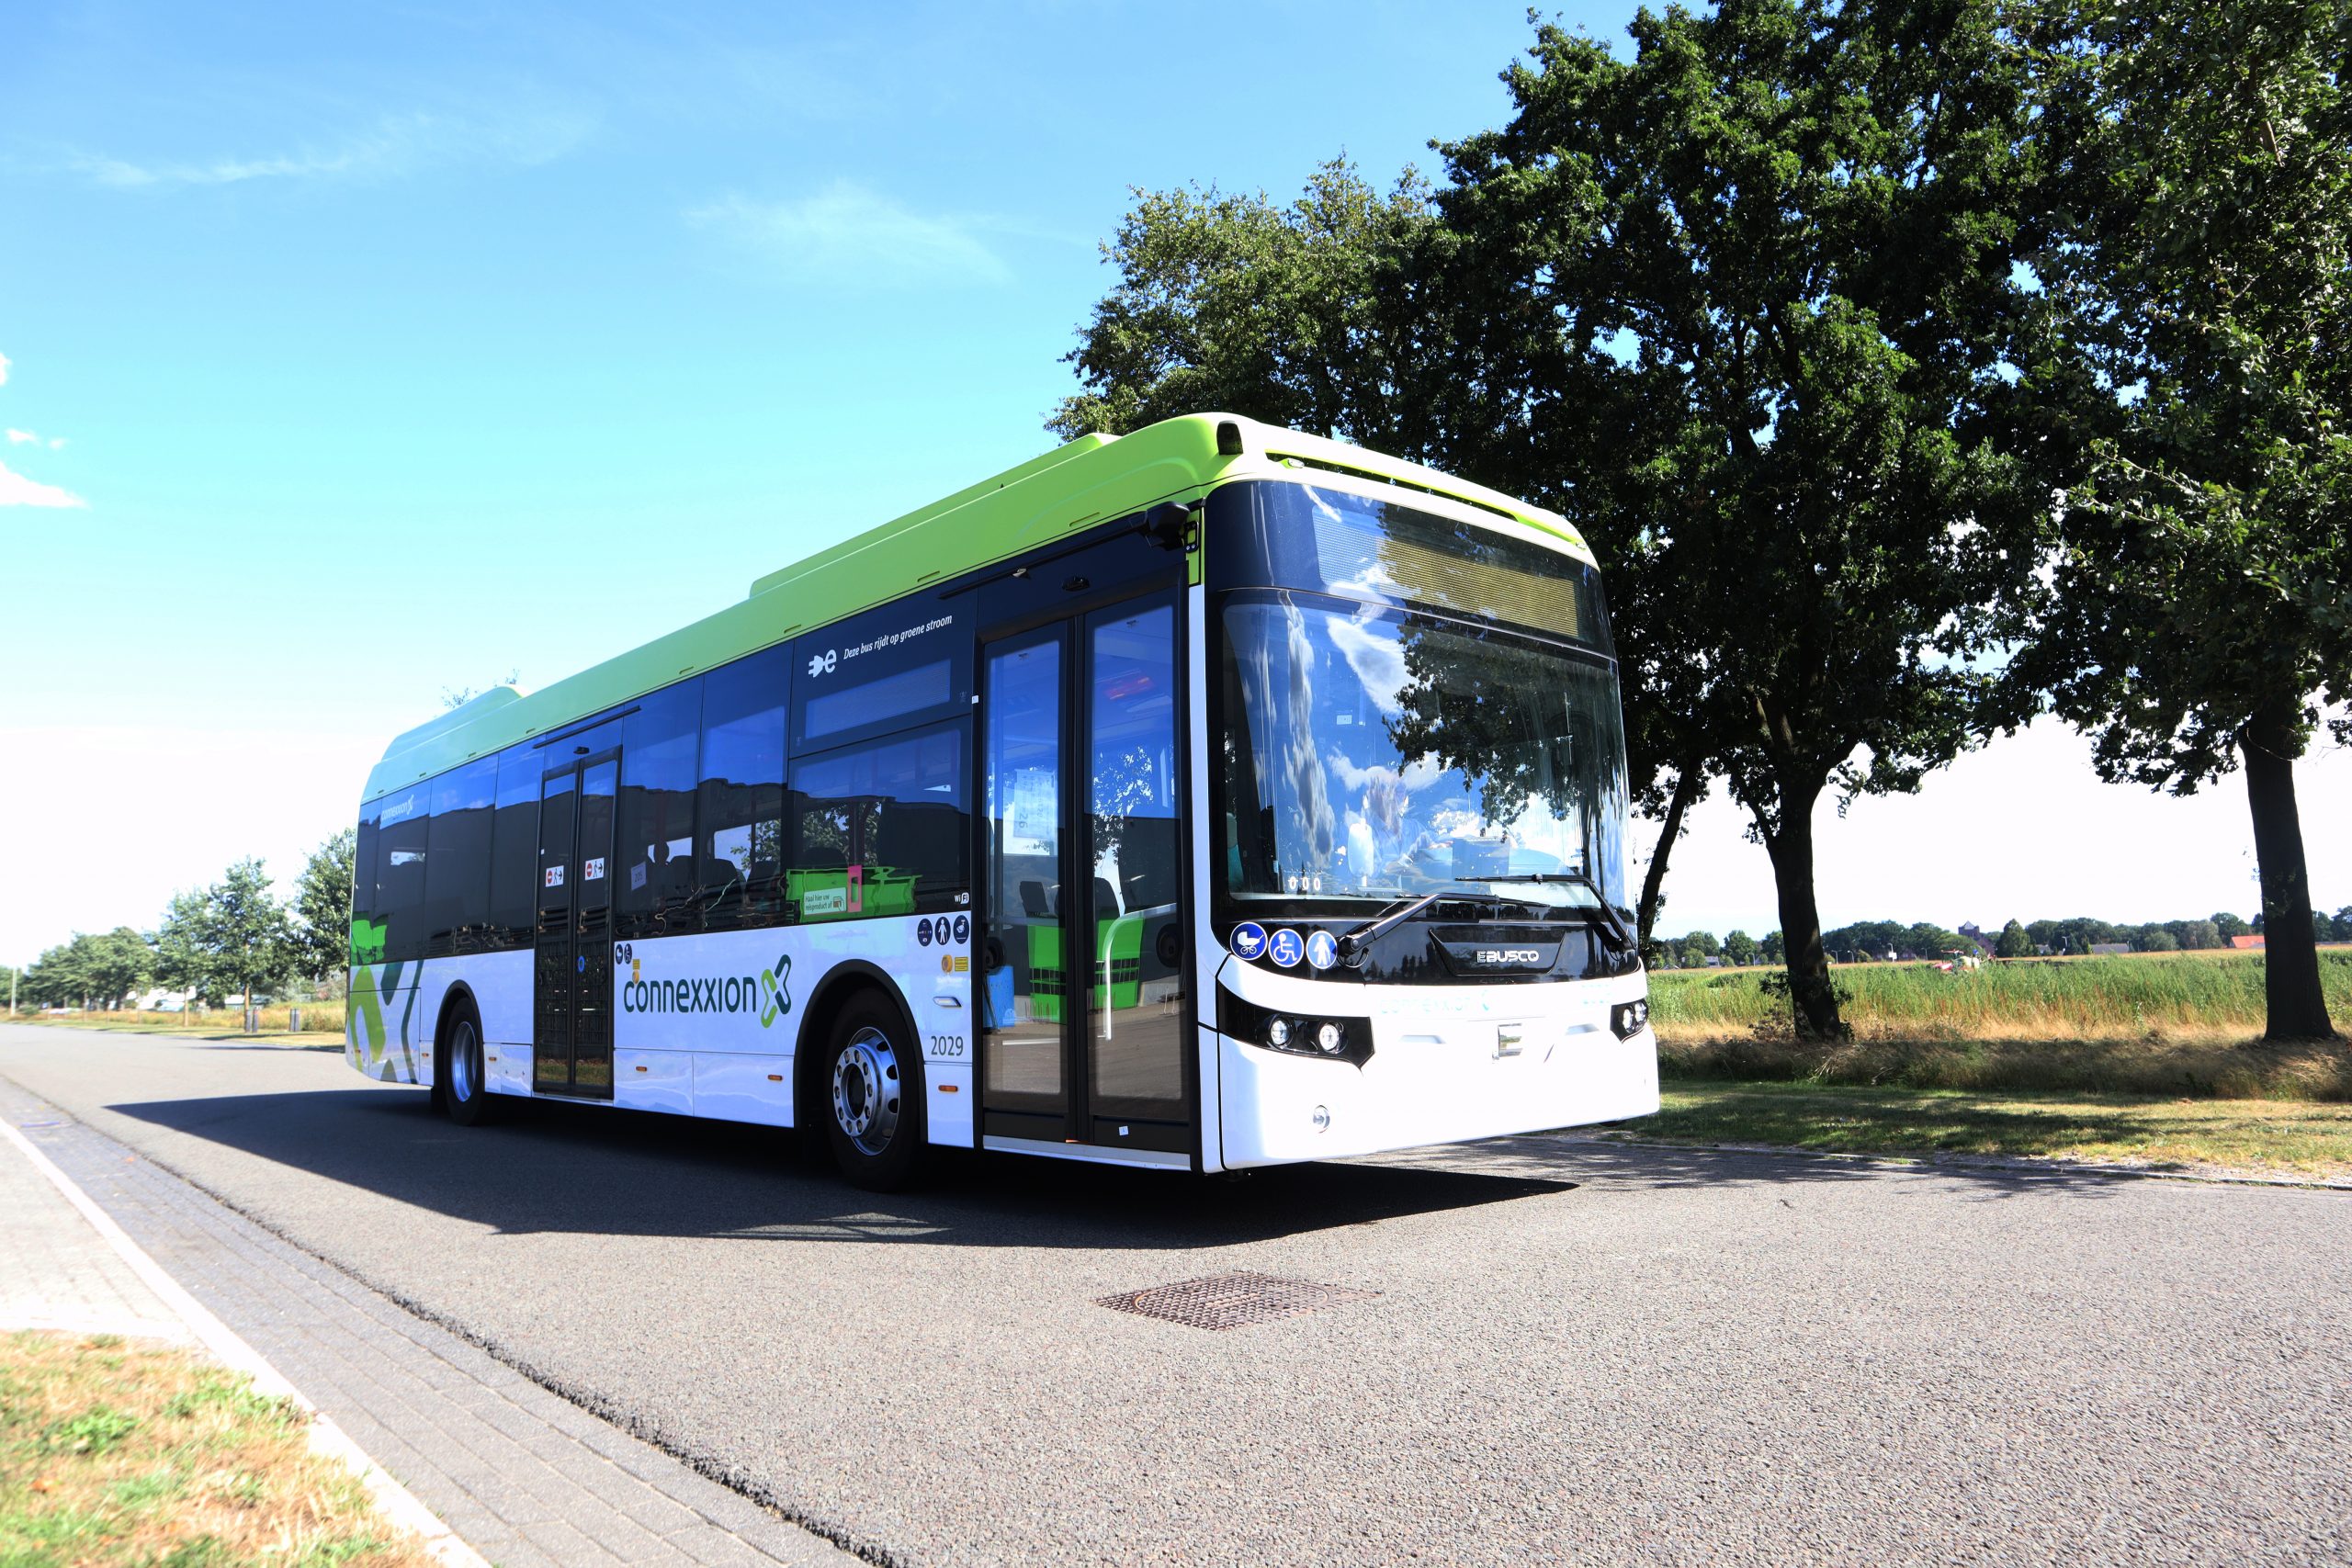 Ebusco presenteert nieuwe Connexxion-bus tijdens OV Expo OV Expo